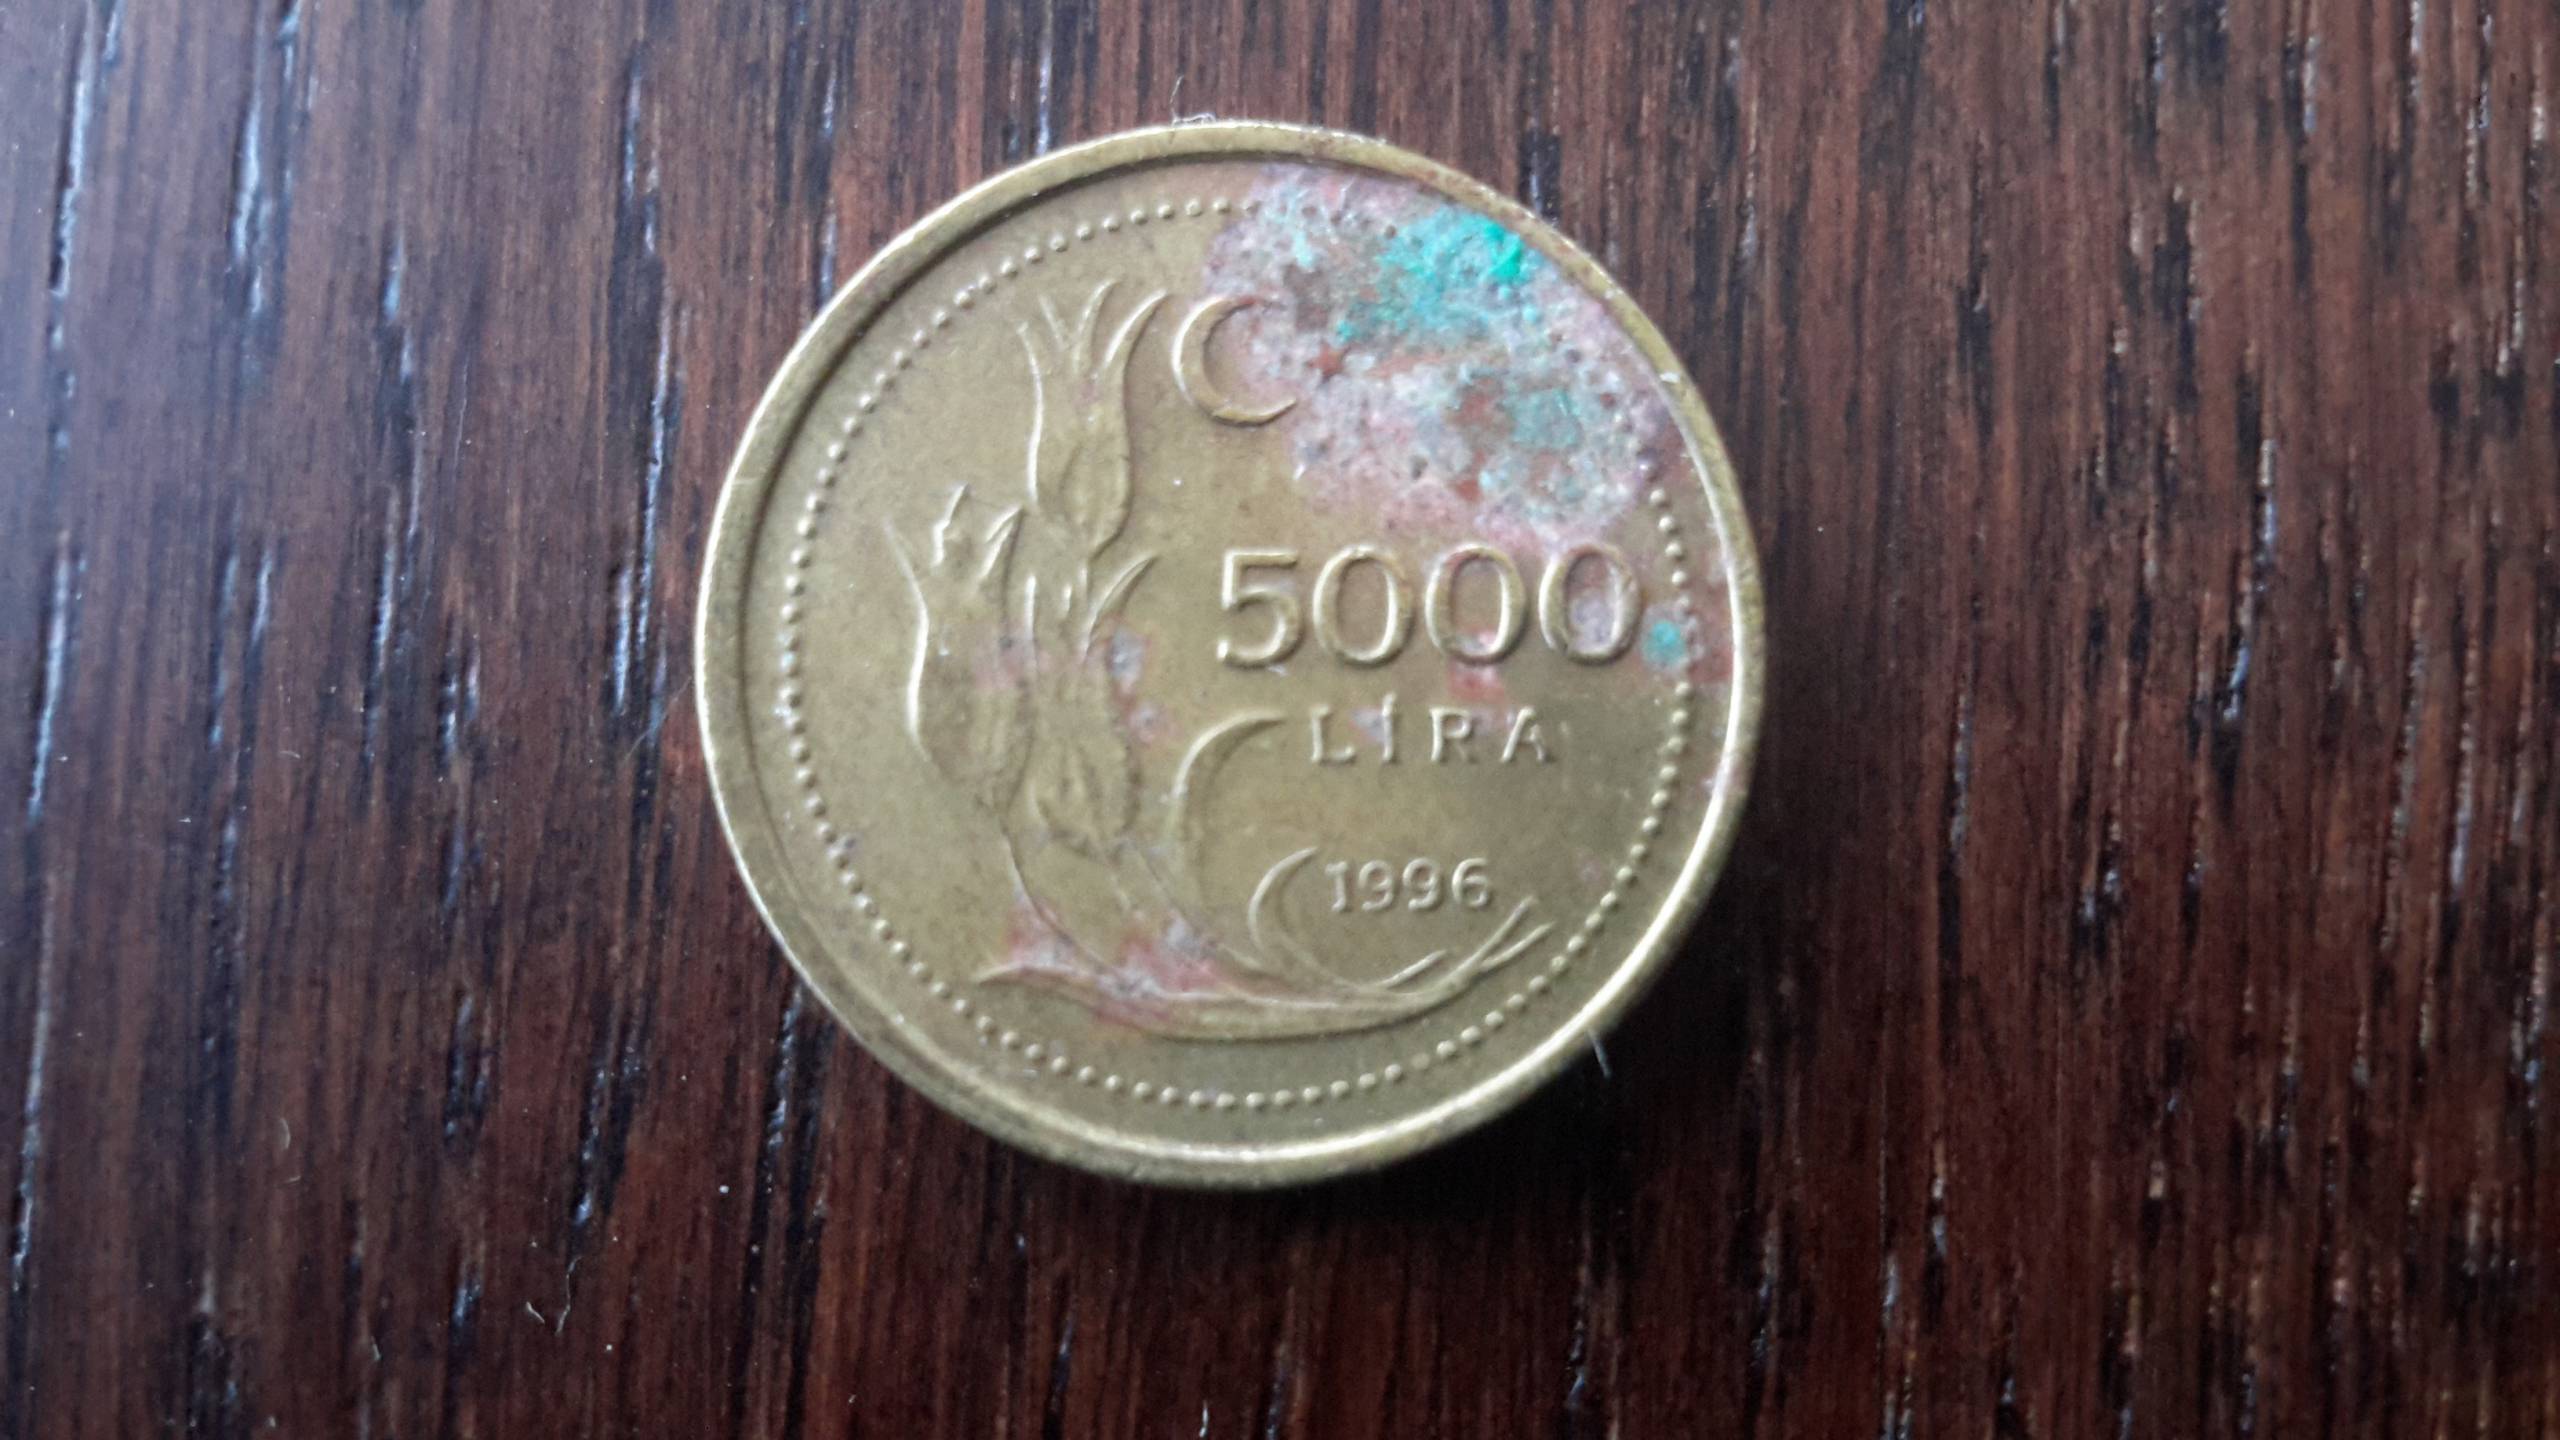 35 лир в рублях. Монета turkiye Cumhuriyeti c 5000 lira 1996 года.